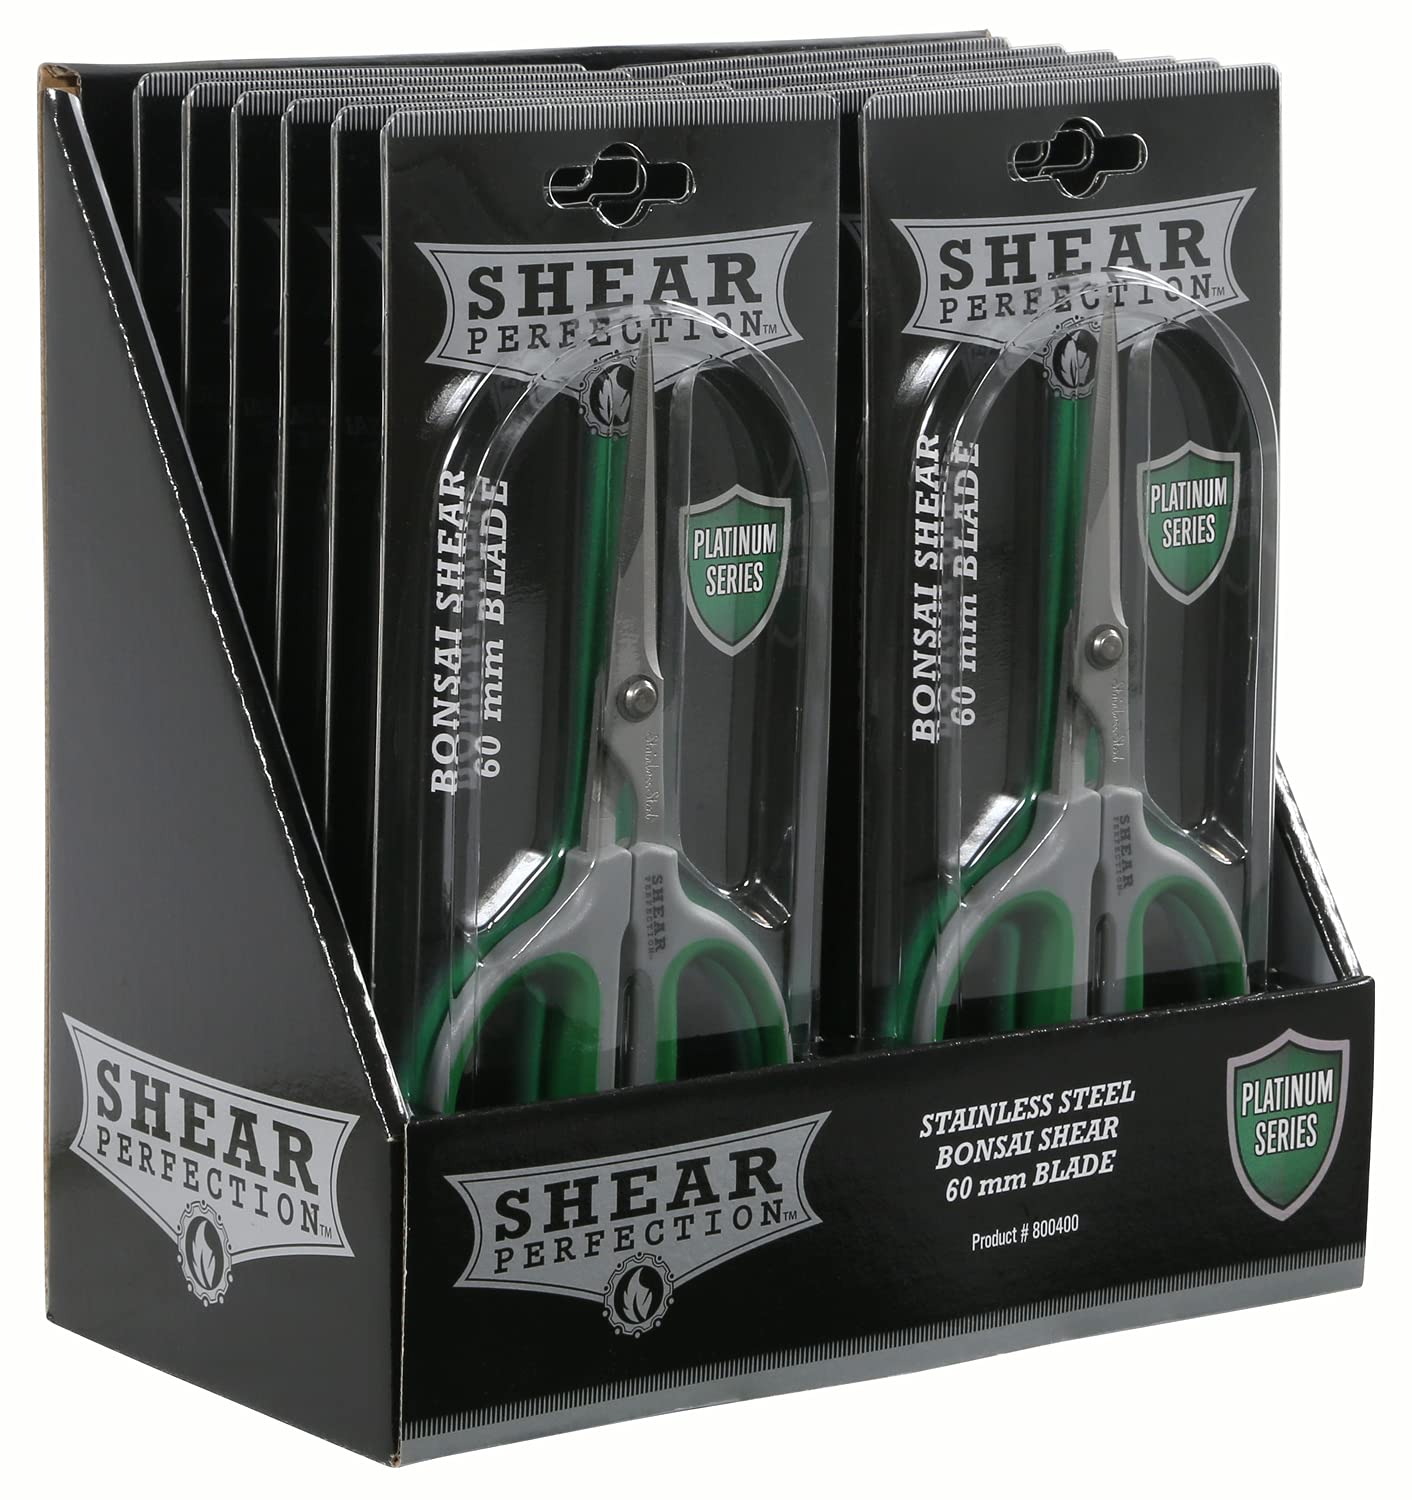 Shear Perfection Platinum Series Stainless Steel Bonsai Scissors, 2.4"/60-mm, Green (800400)